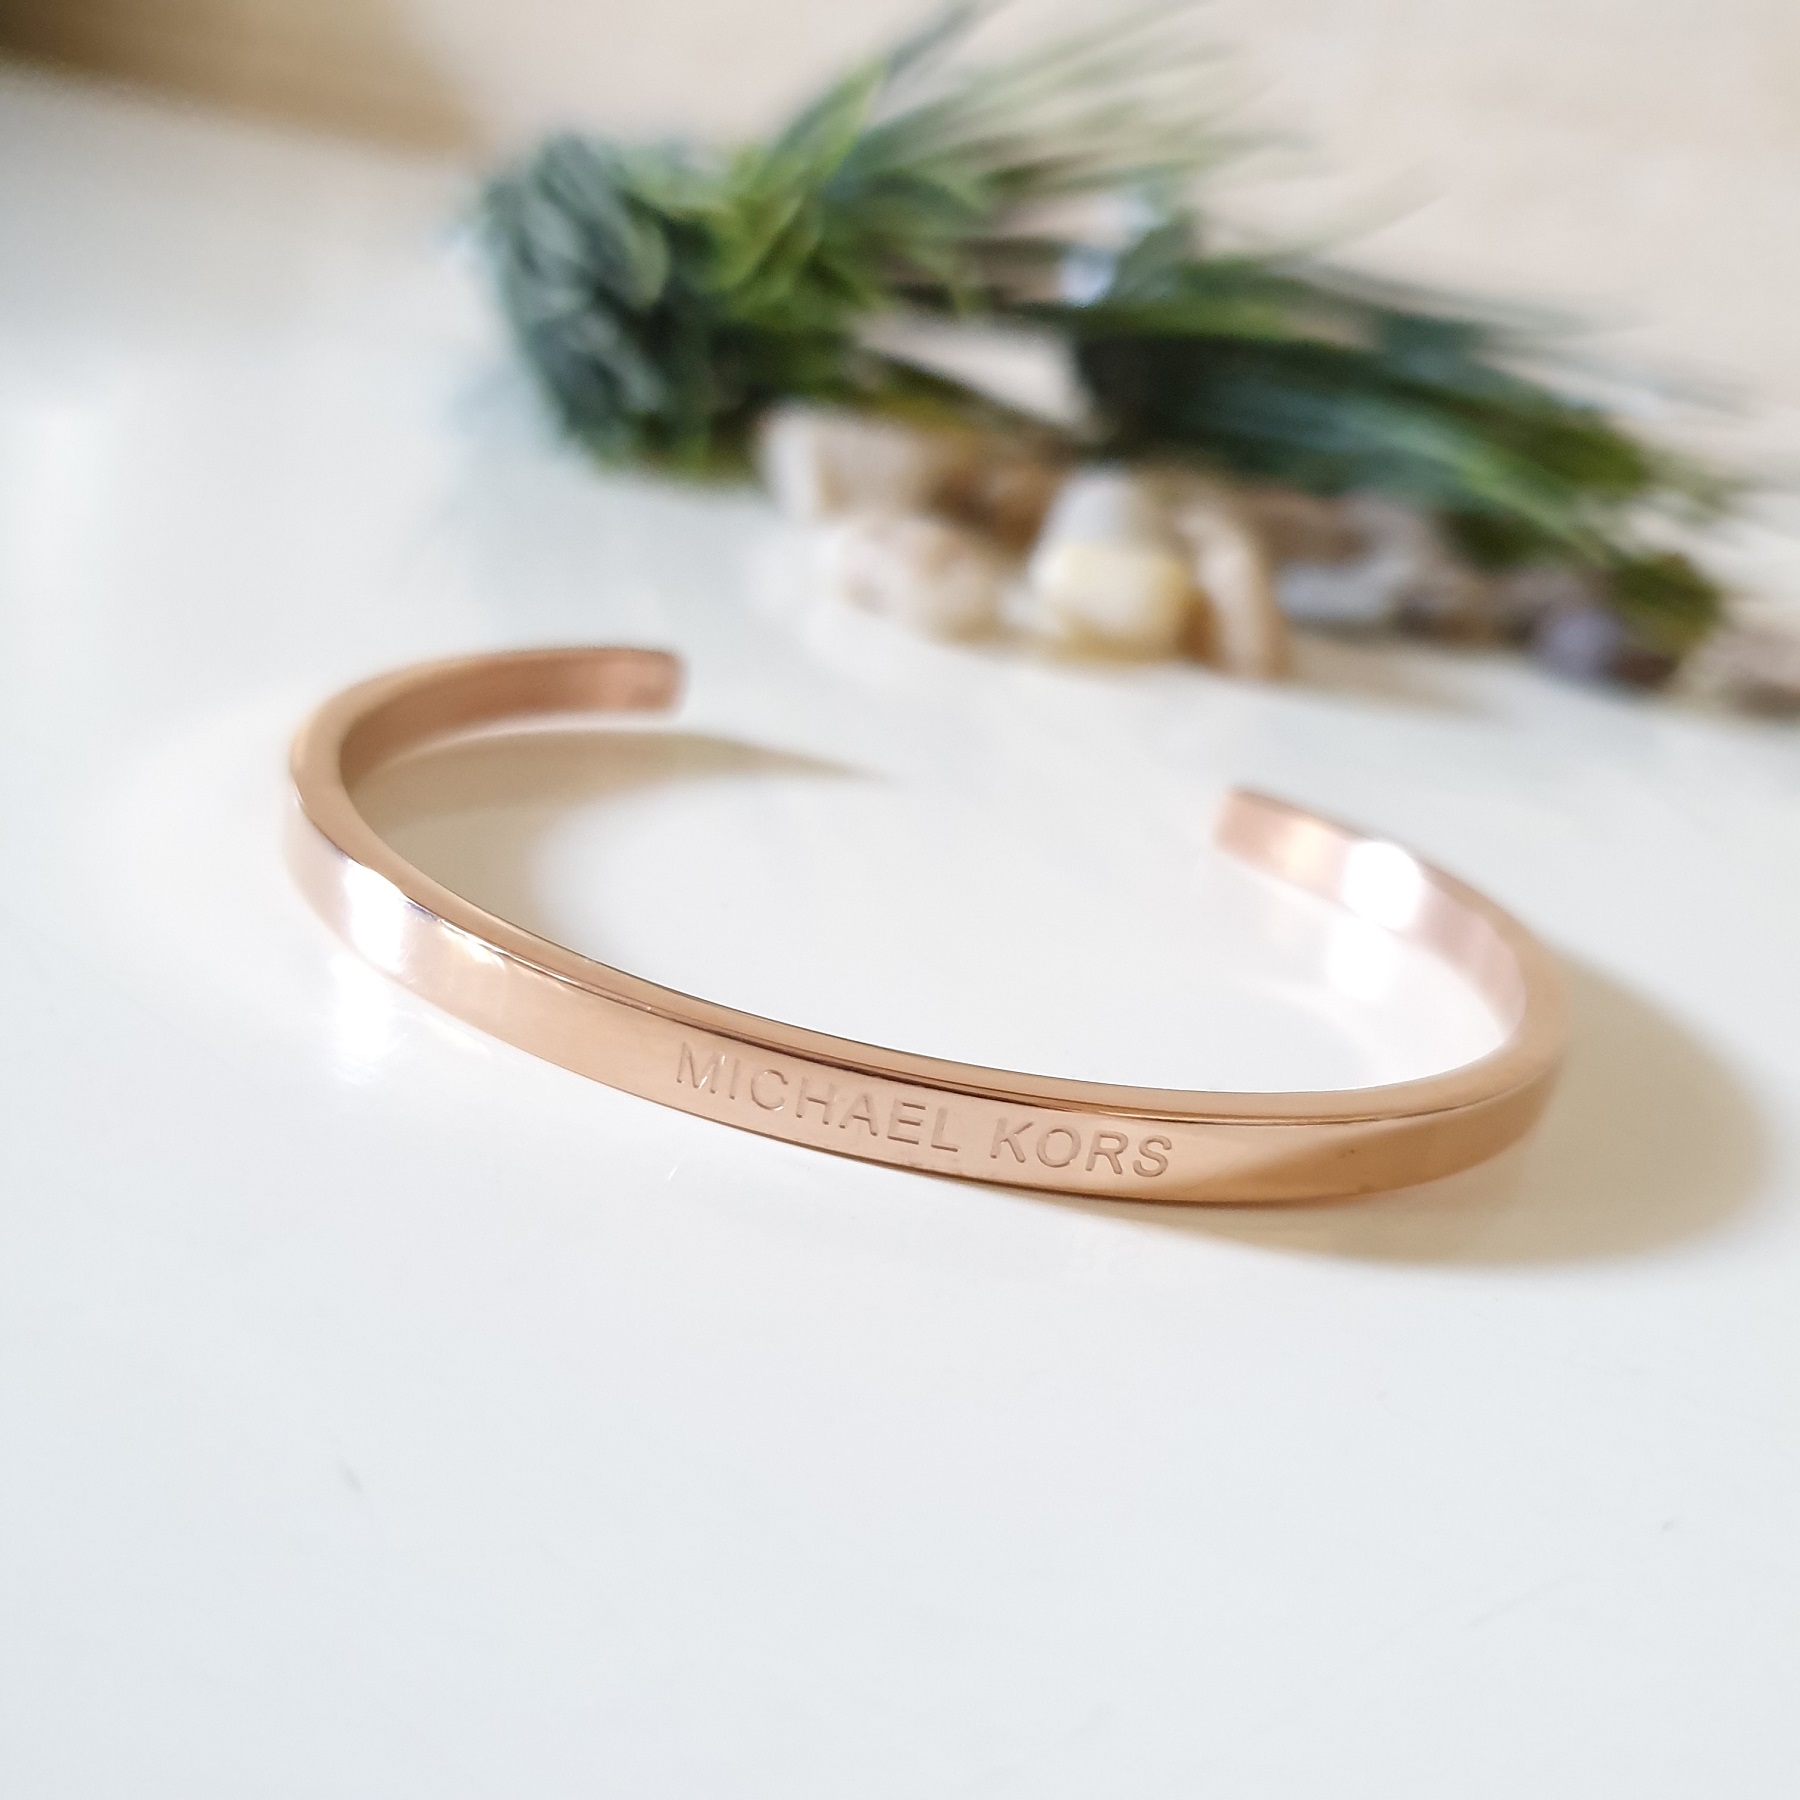 Michael Kors Bangle Astor MKJ1821791 bracelet in pink gold steel an